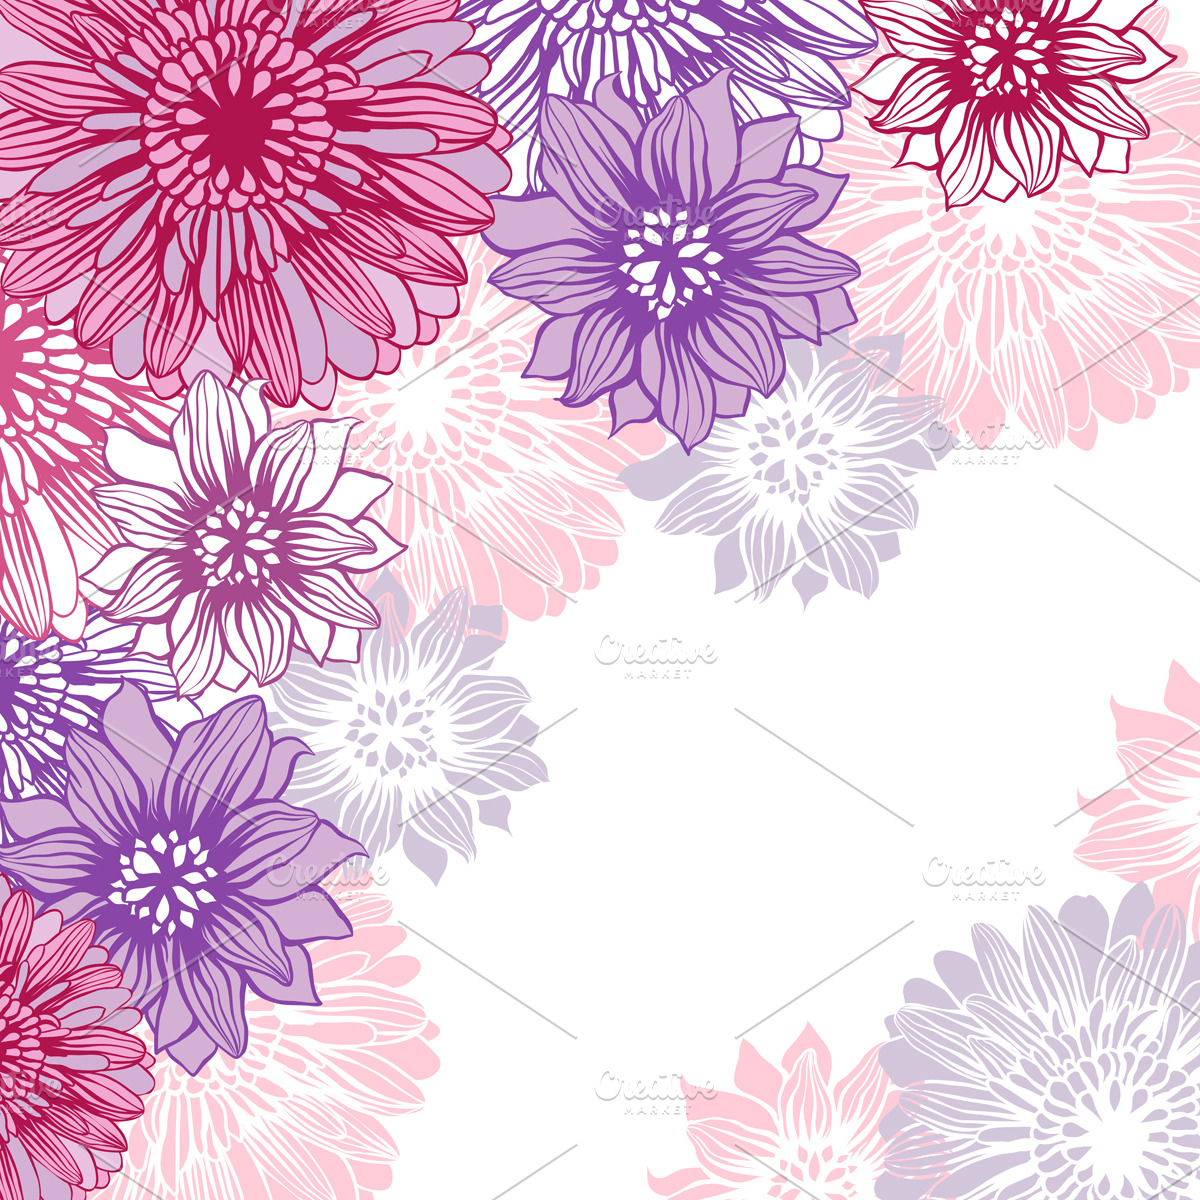 Flower pattern background Free vector in Adobe Illustrator ...